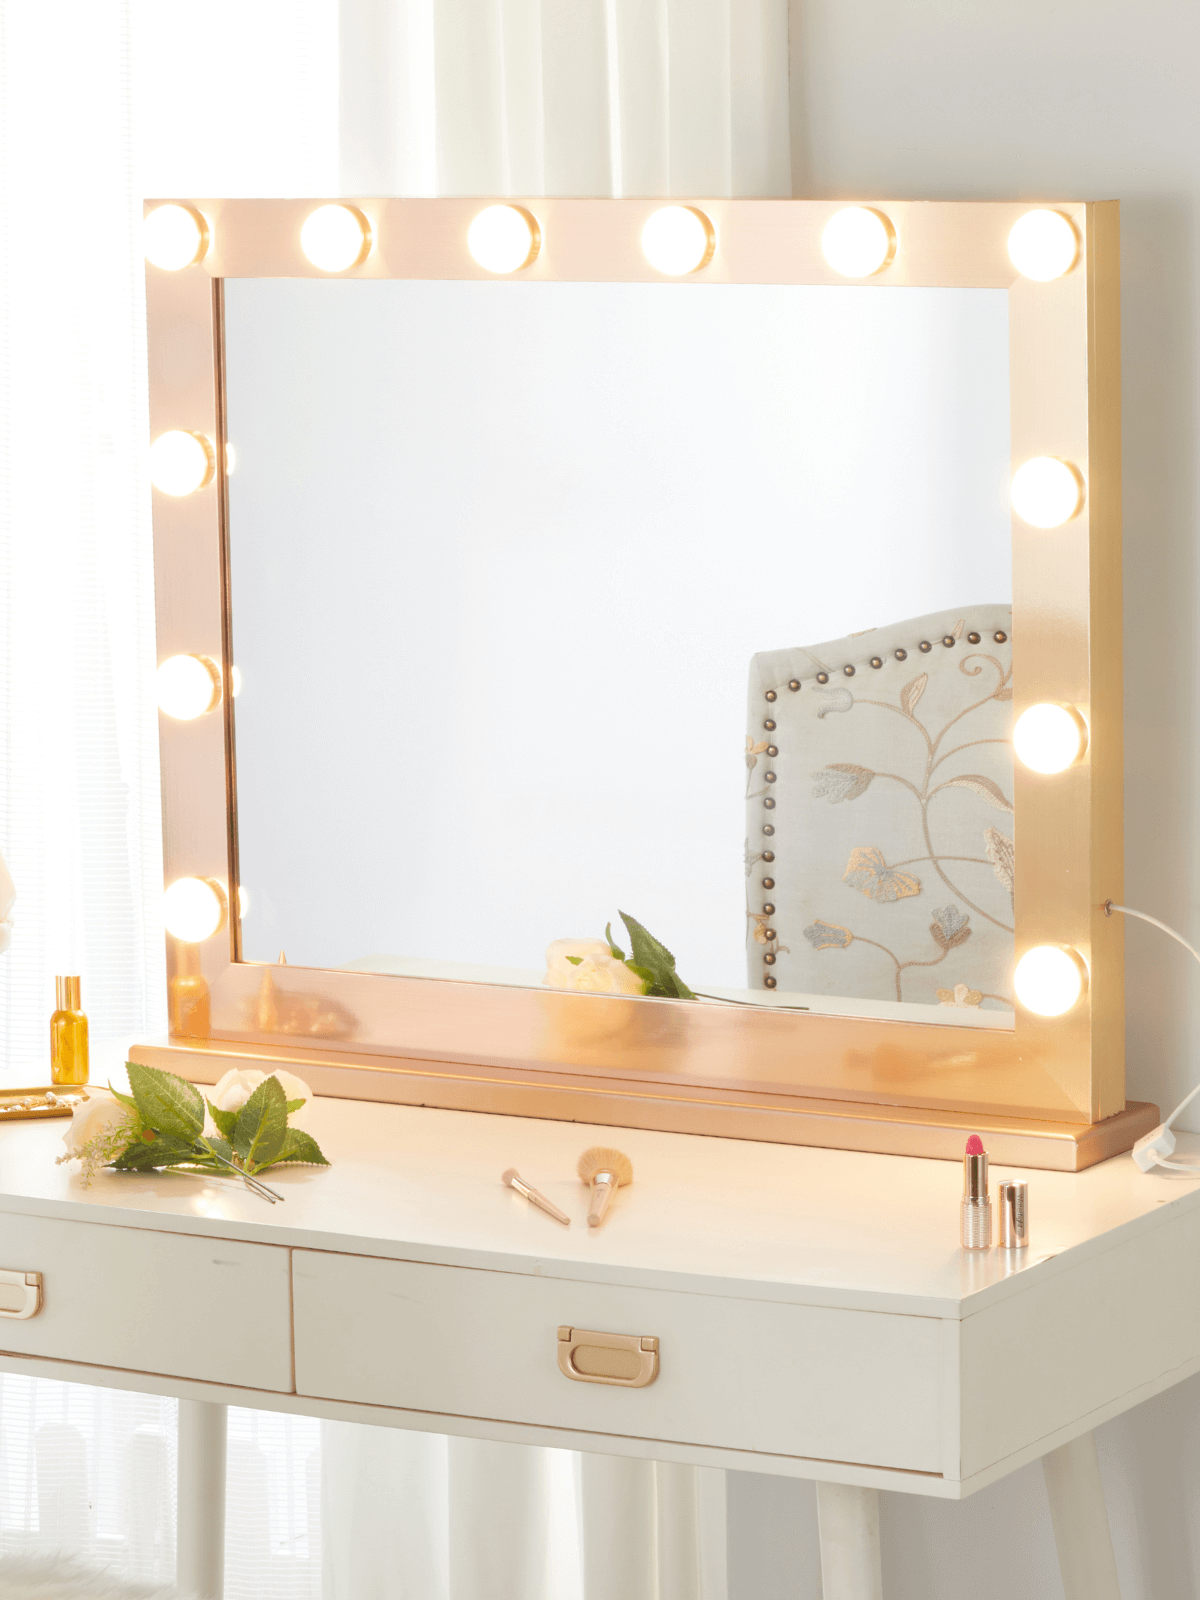 MR1 32 inch Professional LED light Makeup Mirror